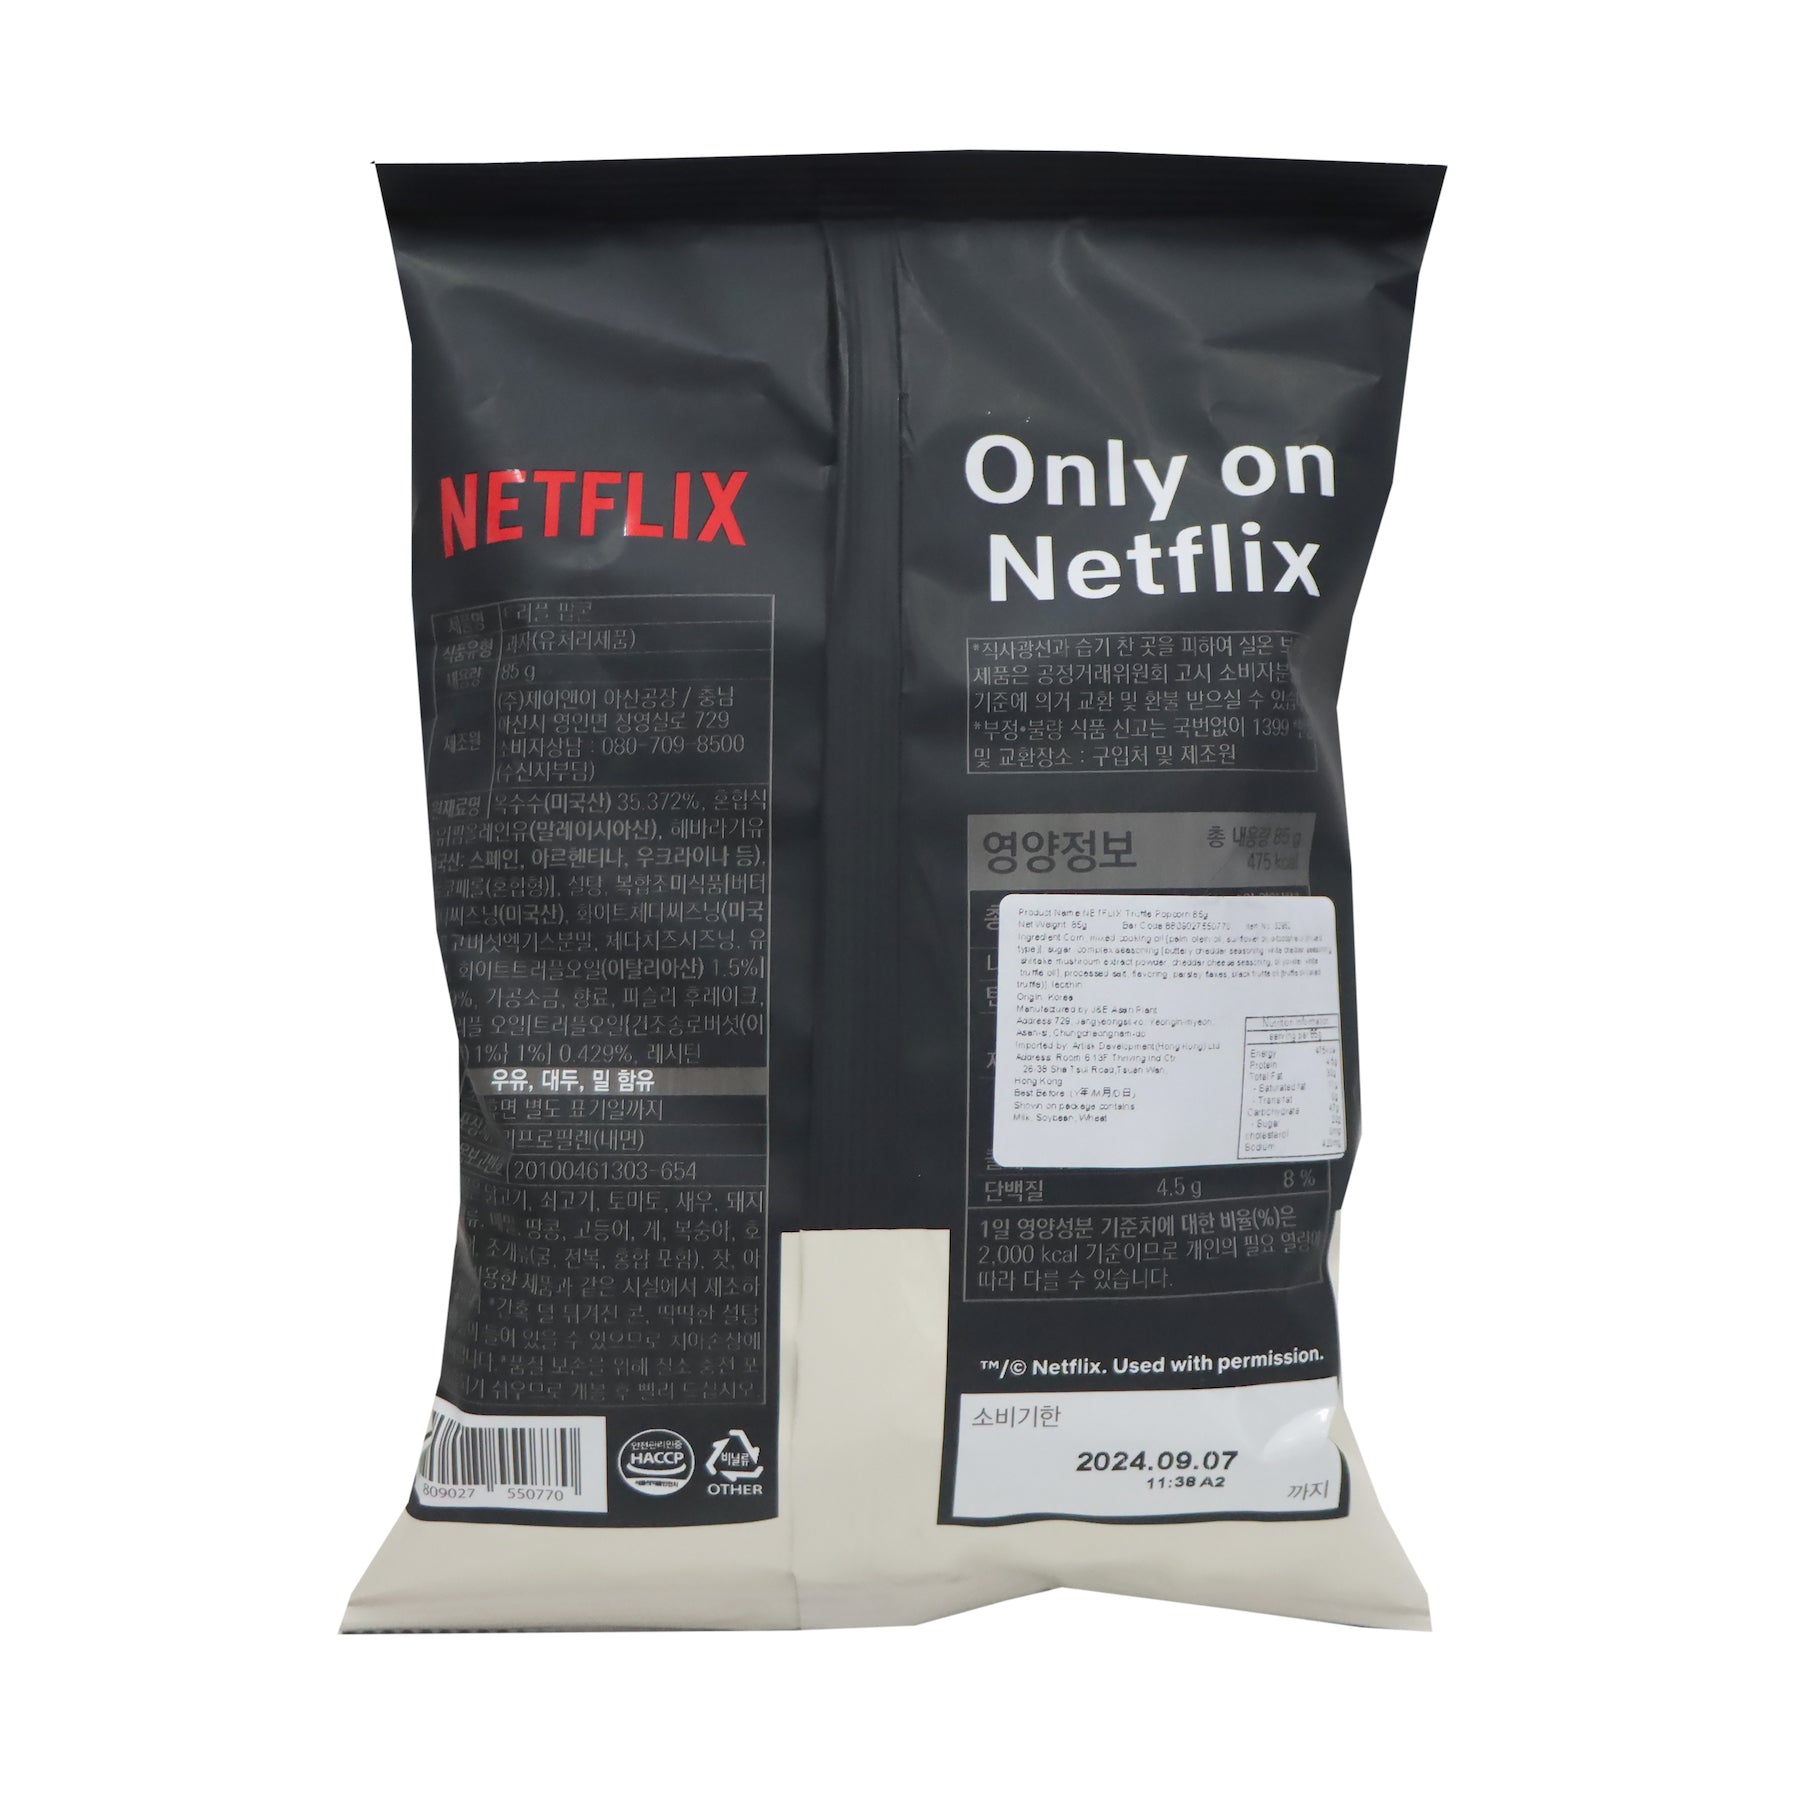 NETFLIX Truffle Popcorn 85g